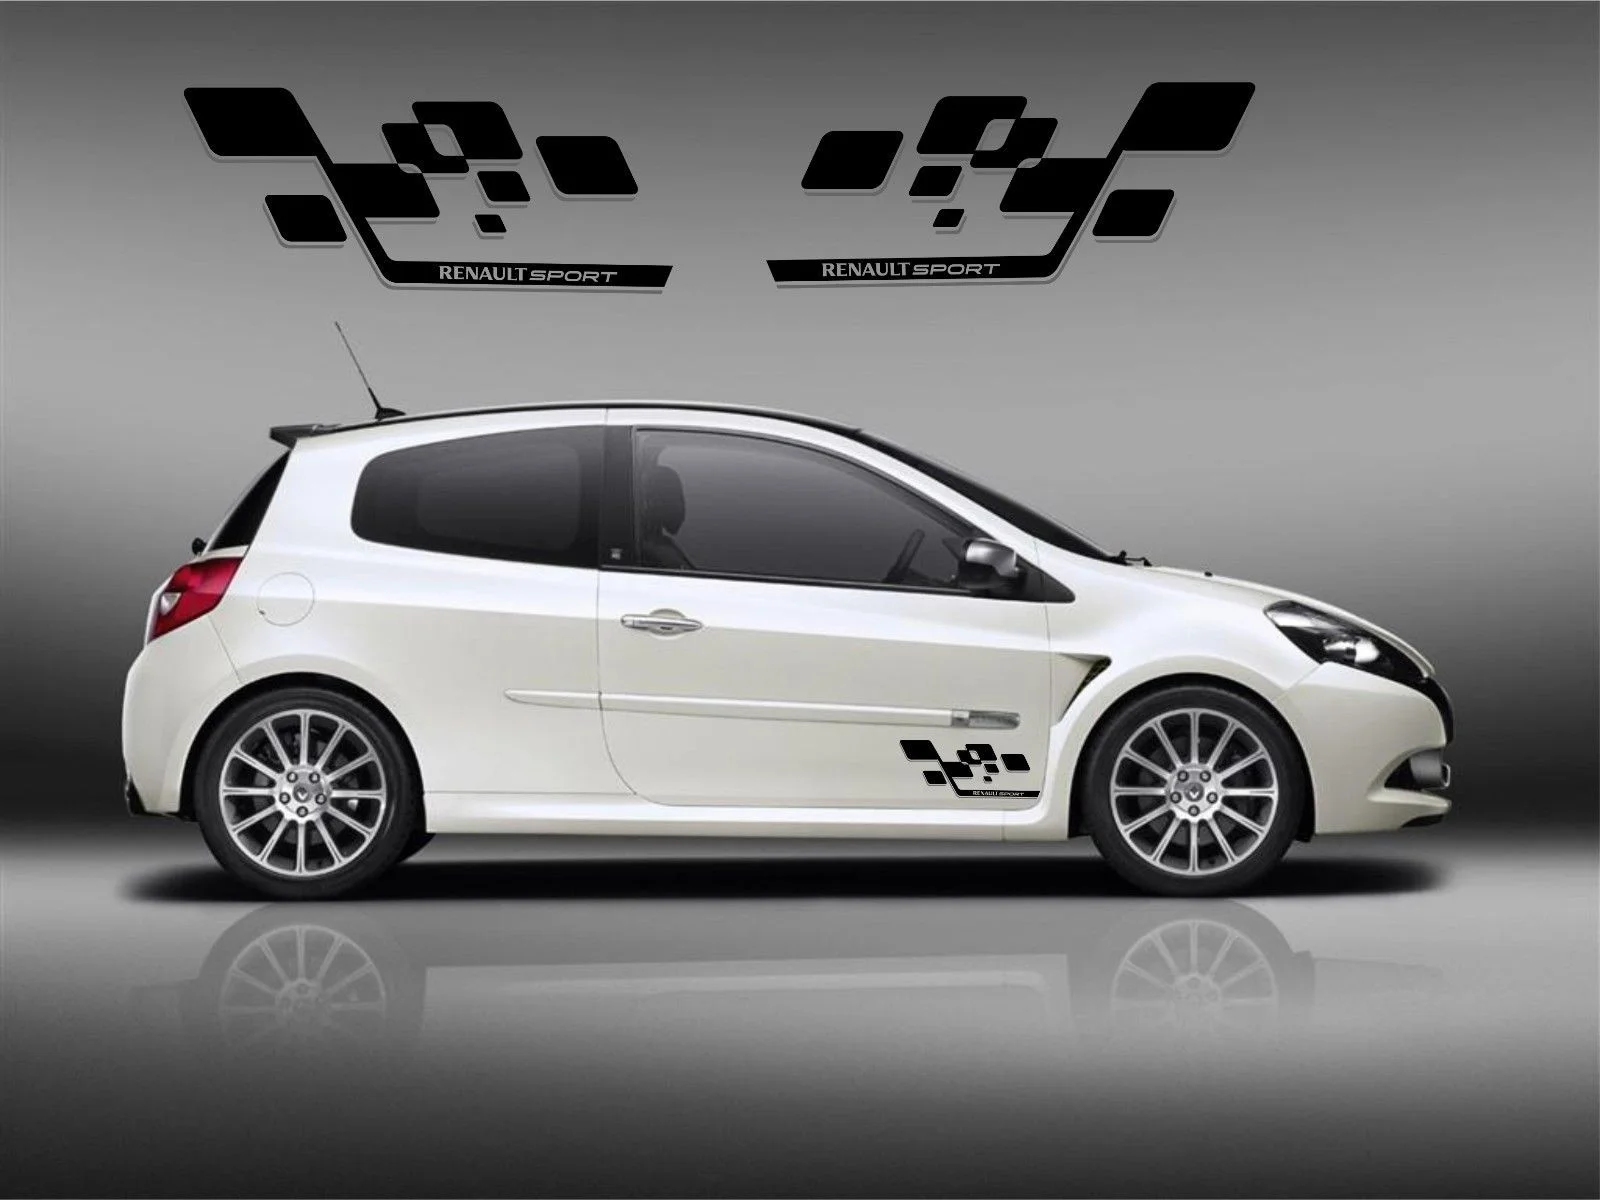 Rear Bumper Stickers Fits Renault Sport Graphics Premium Qaulity YN84 